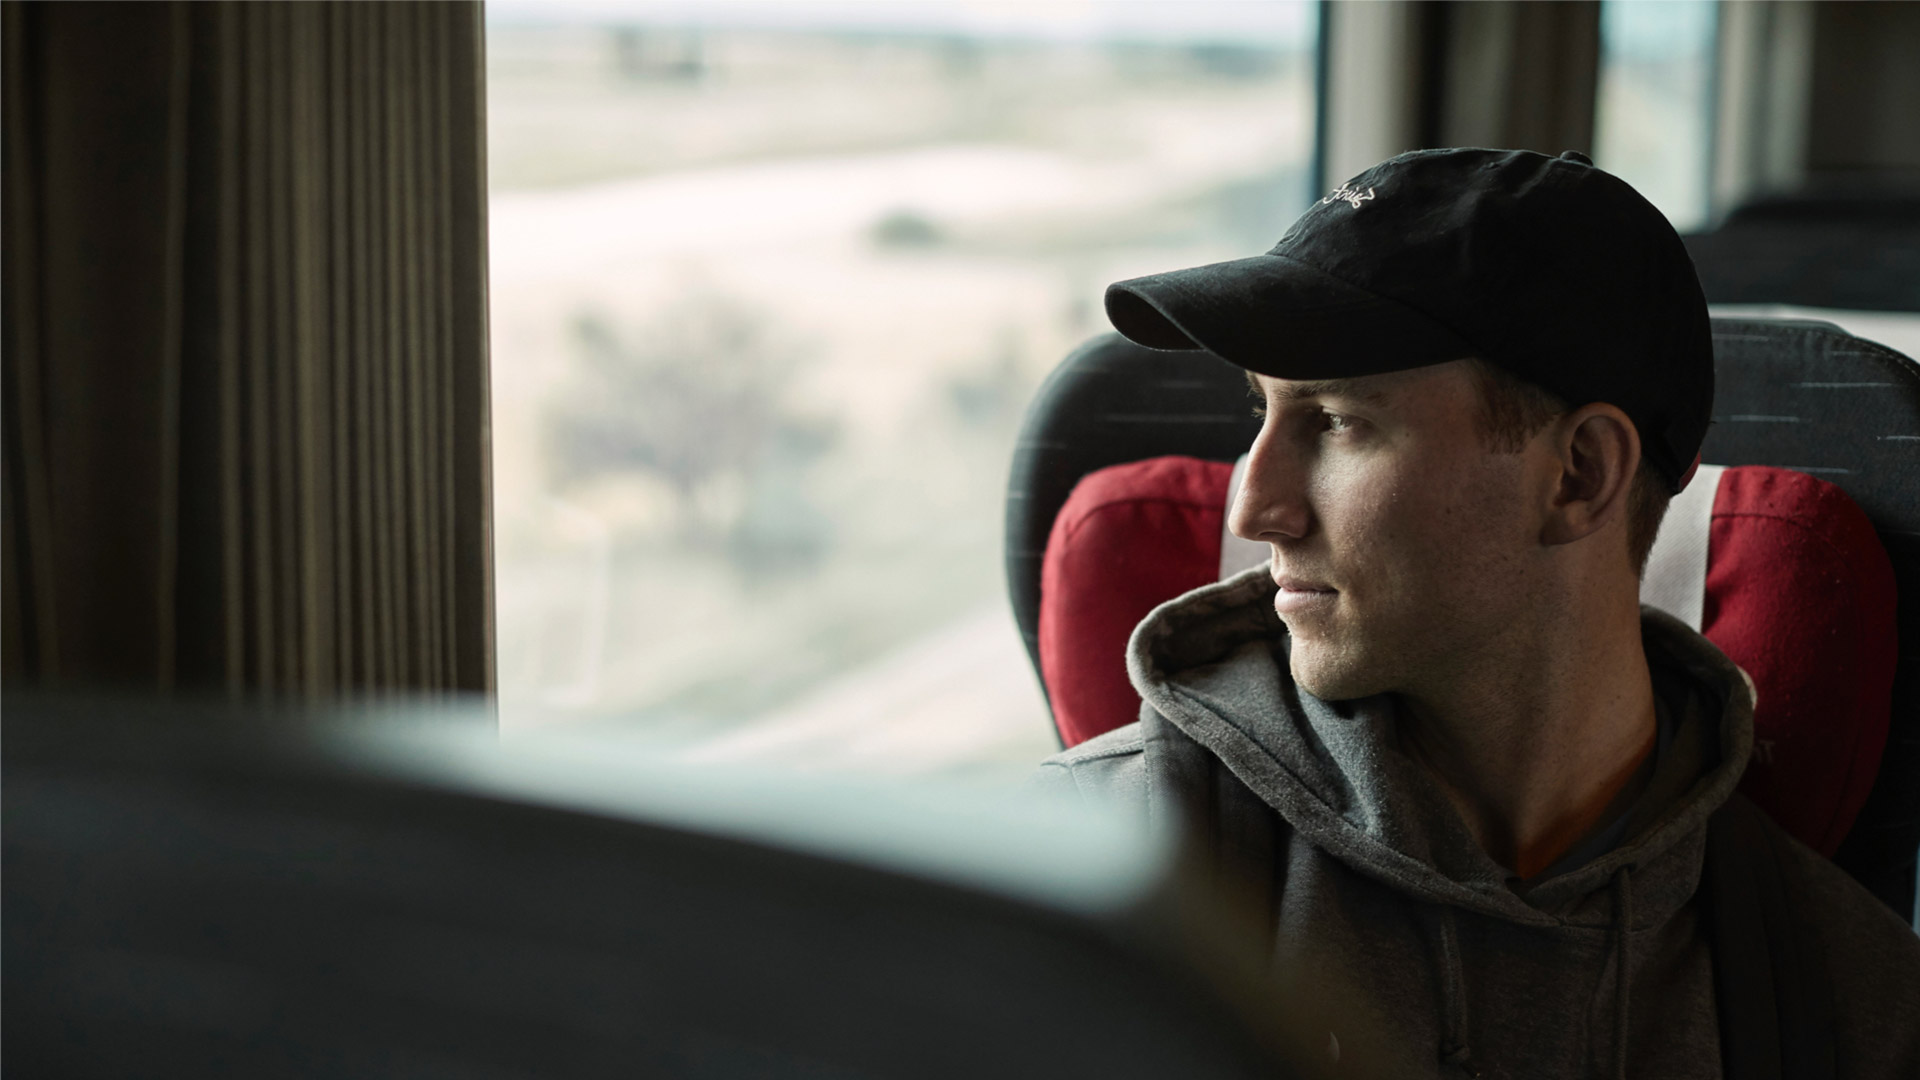 Man wearing baseball cap looking out train window